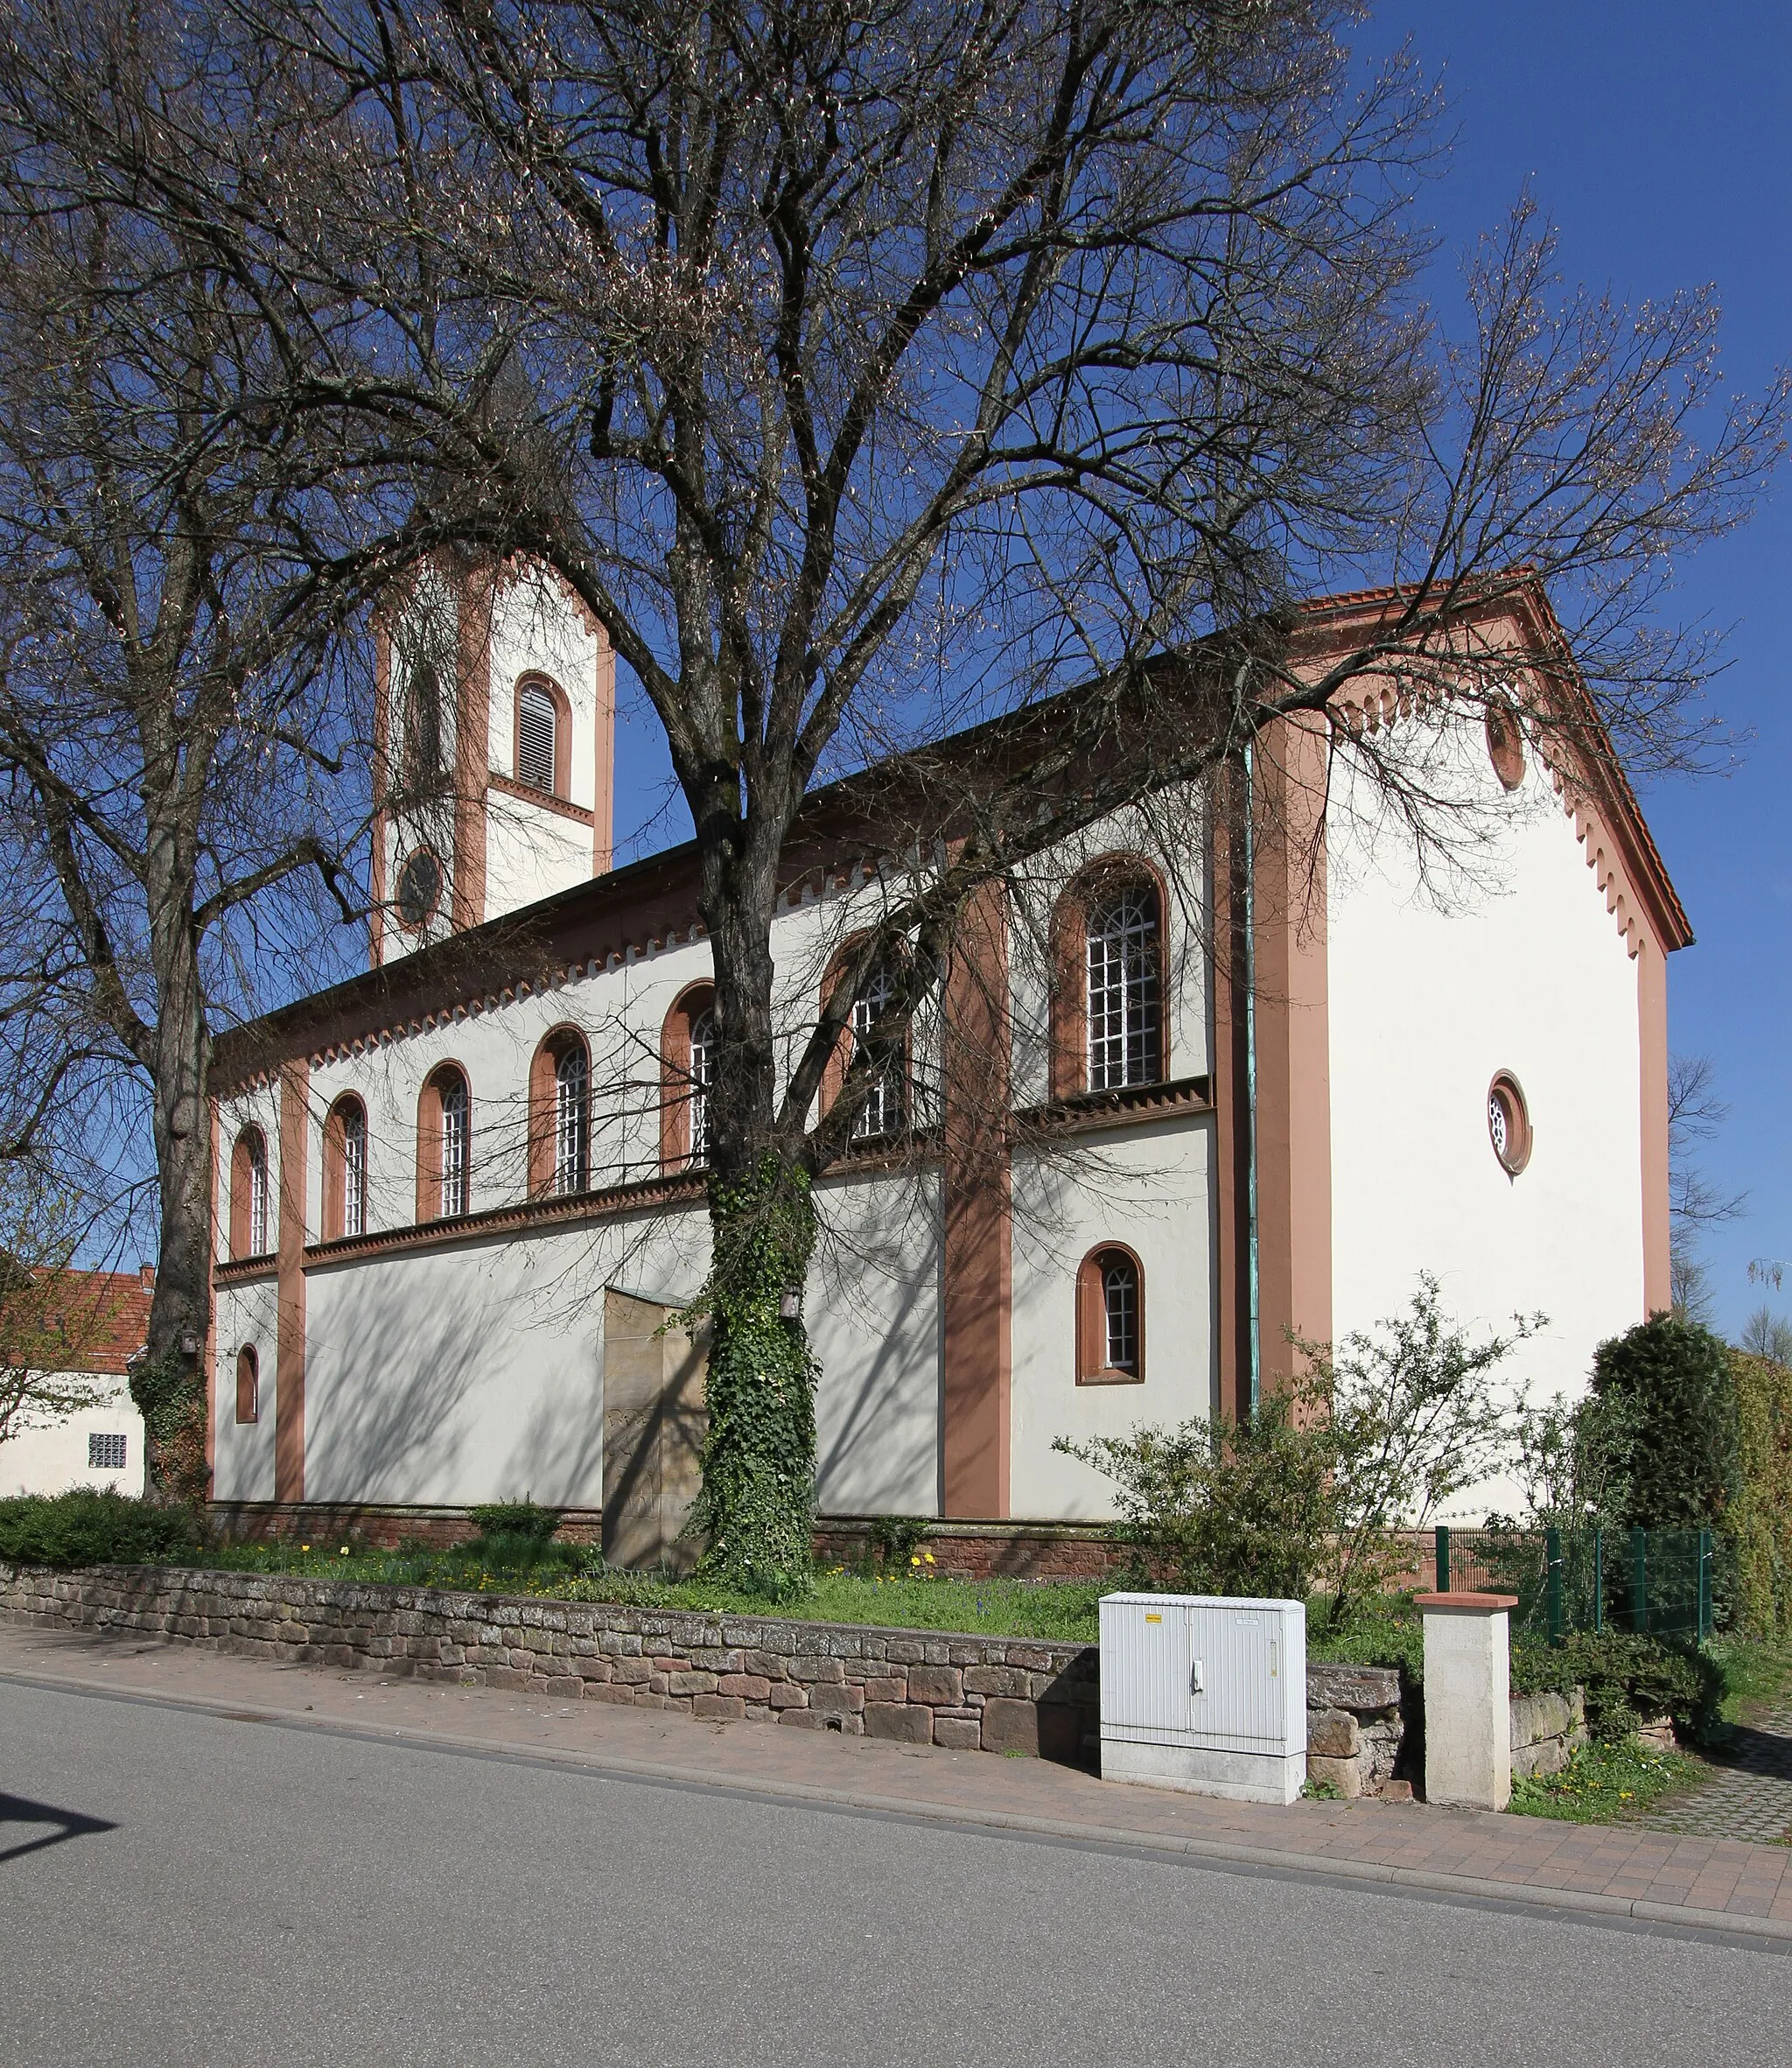 Image of Billigheim-Ingenheim